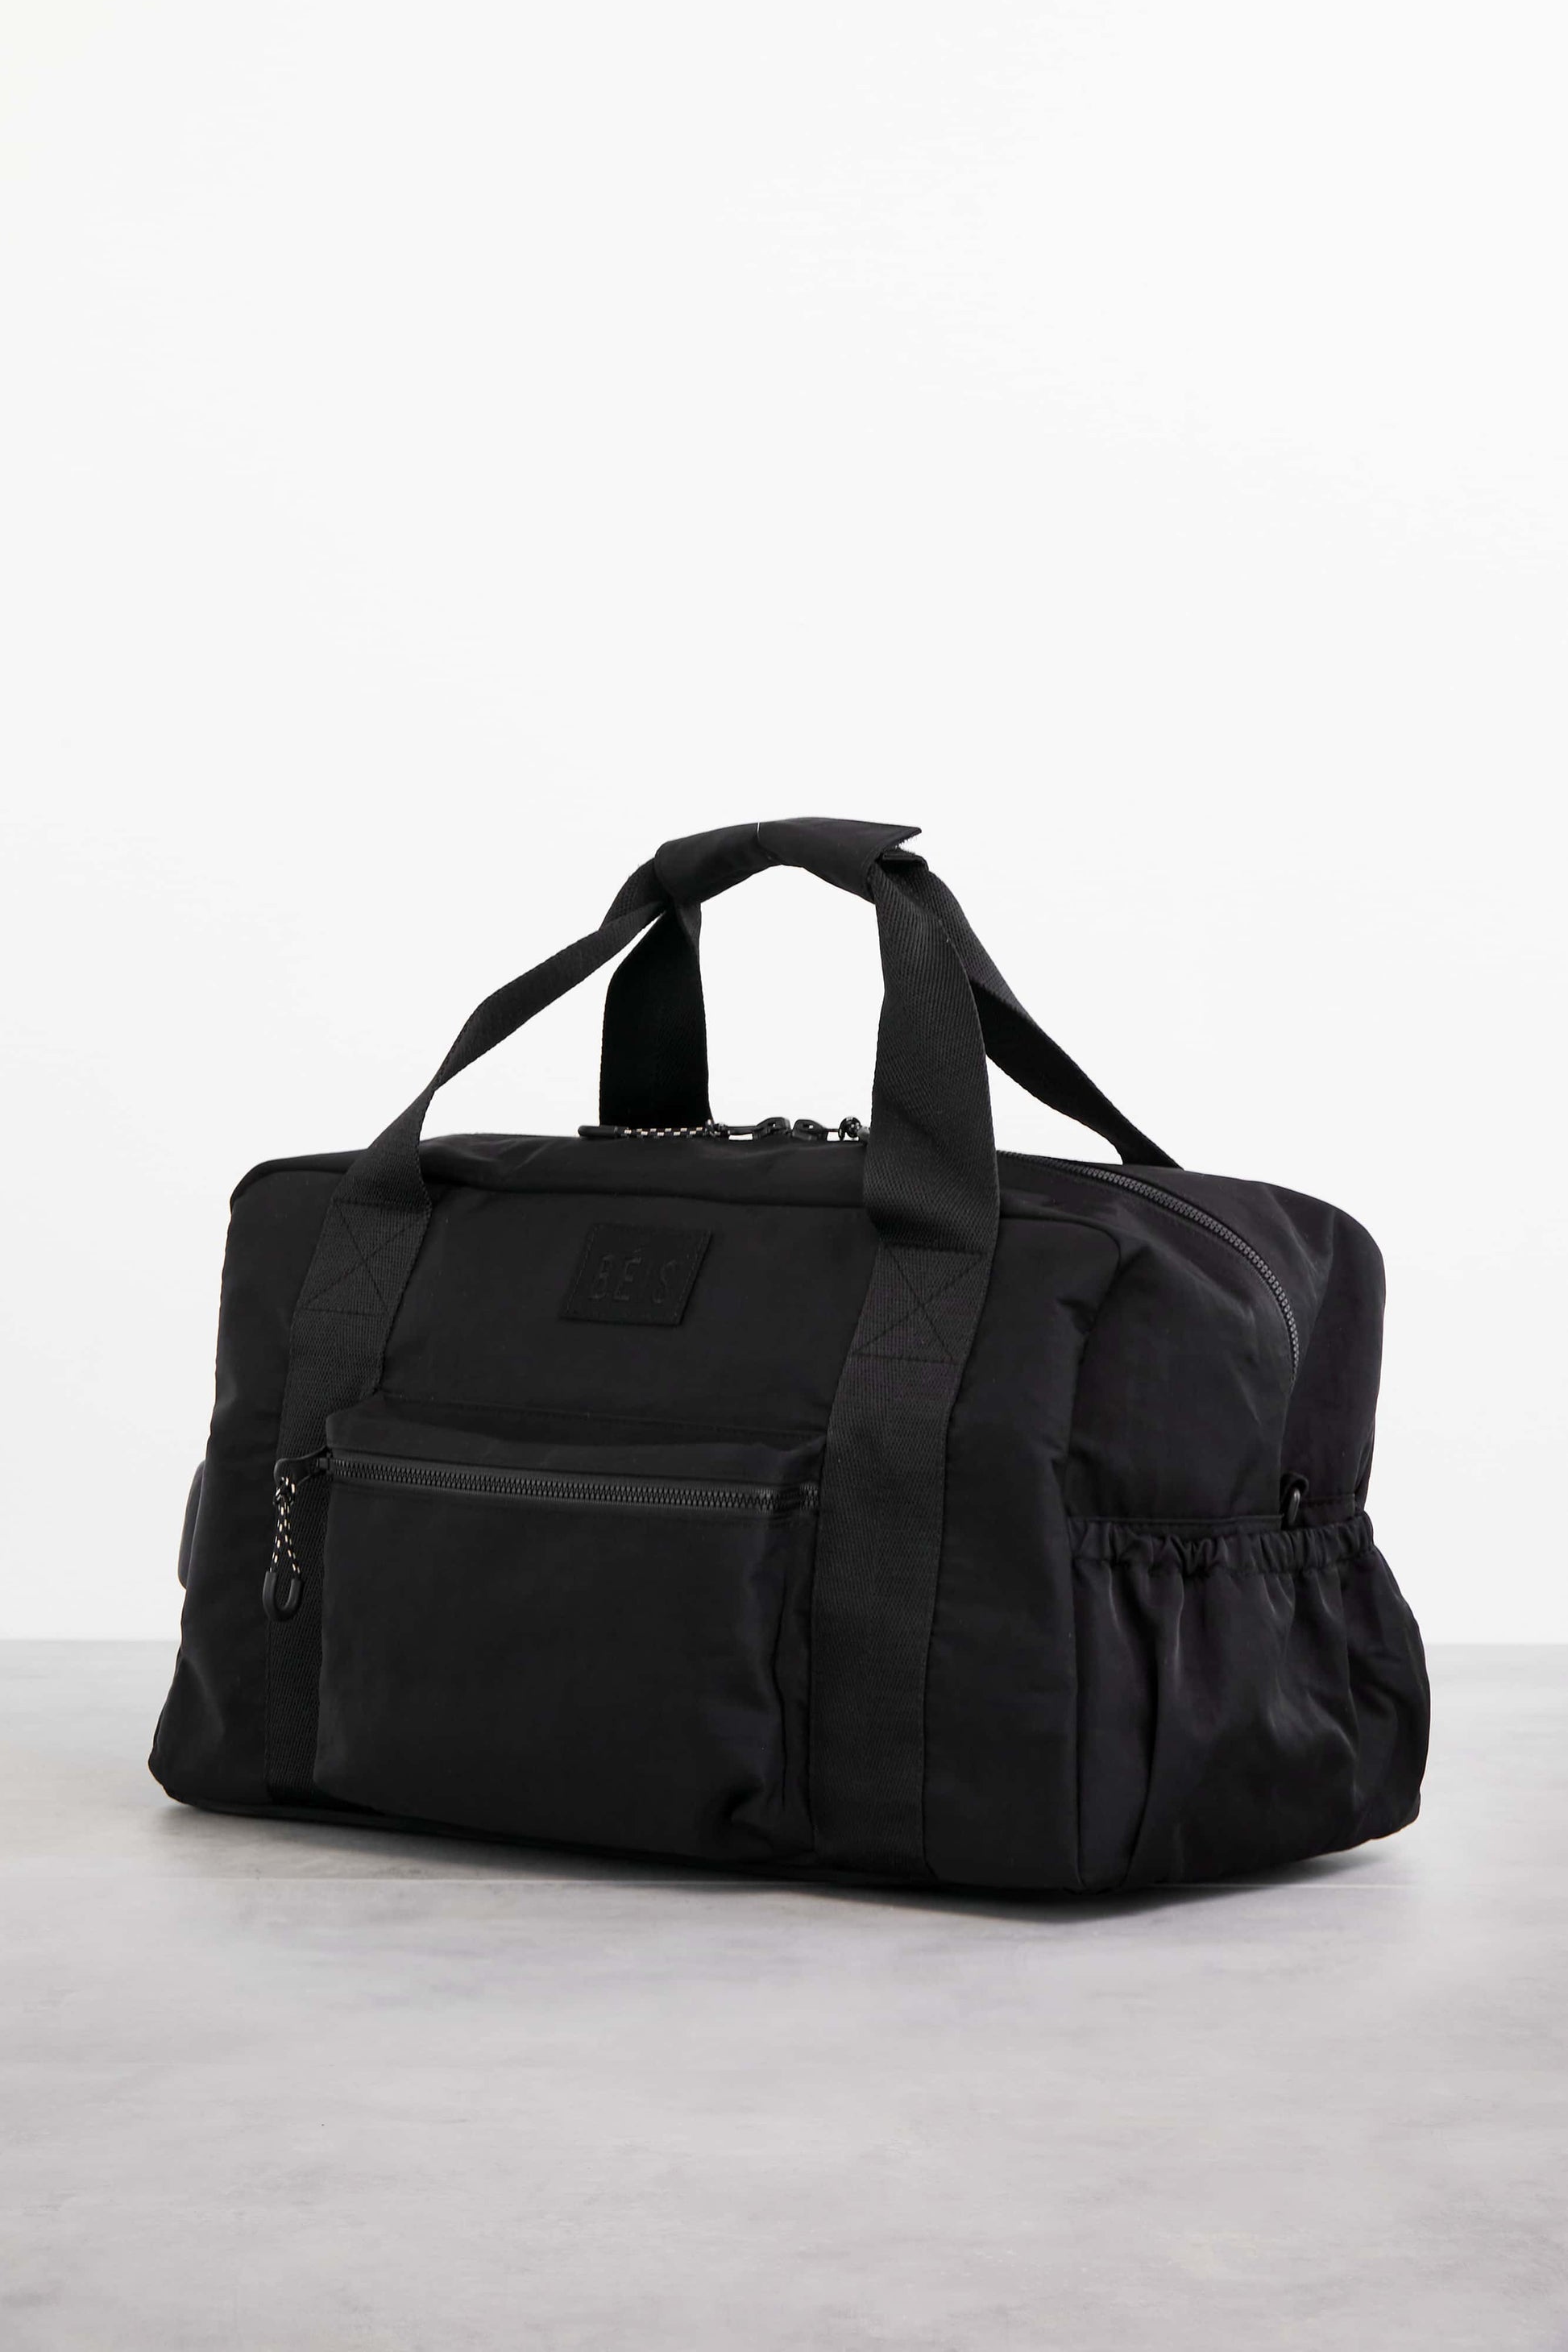 Travel Bag Cargo 25 Pink/Black